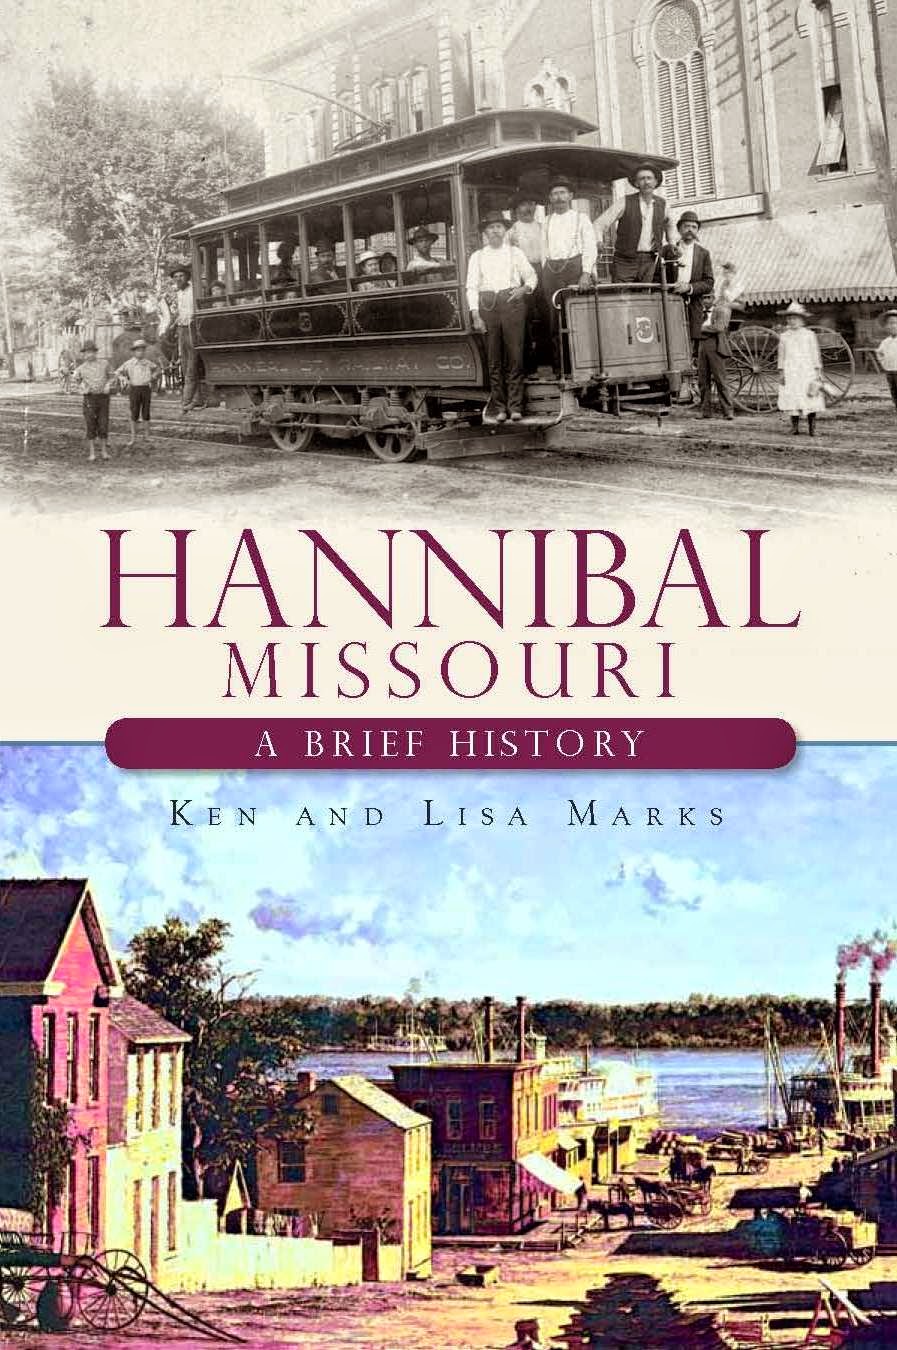 Hannibal, Missouri: A Brief History